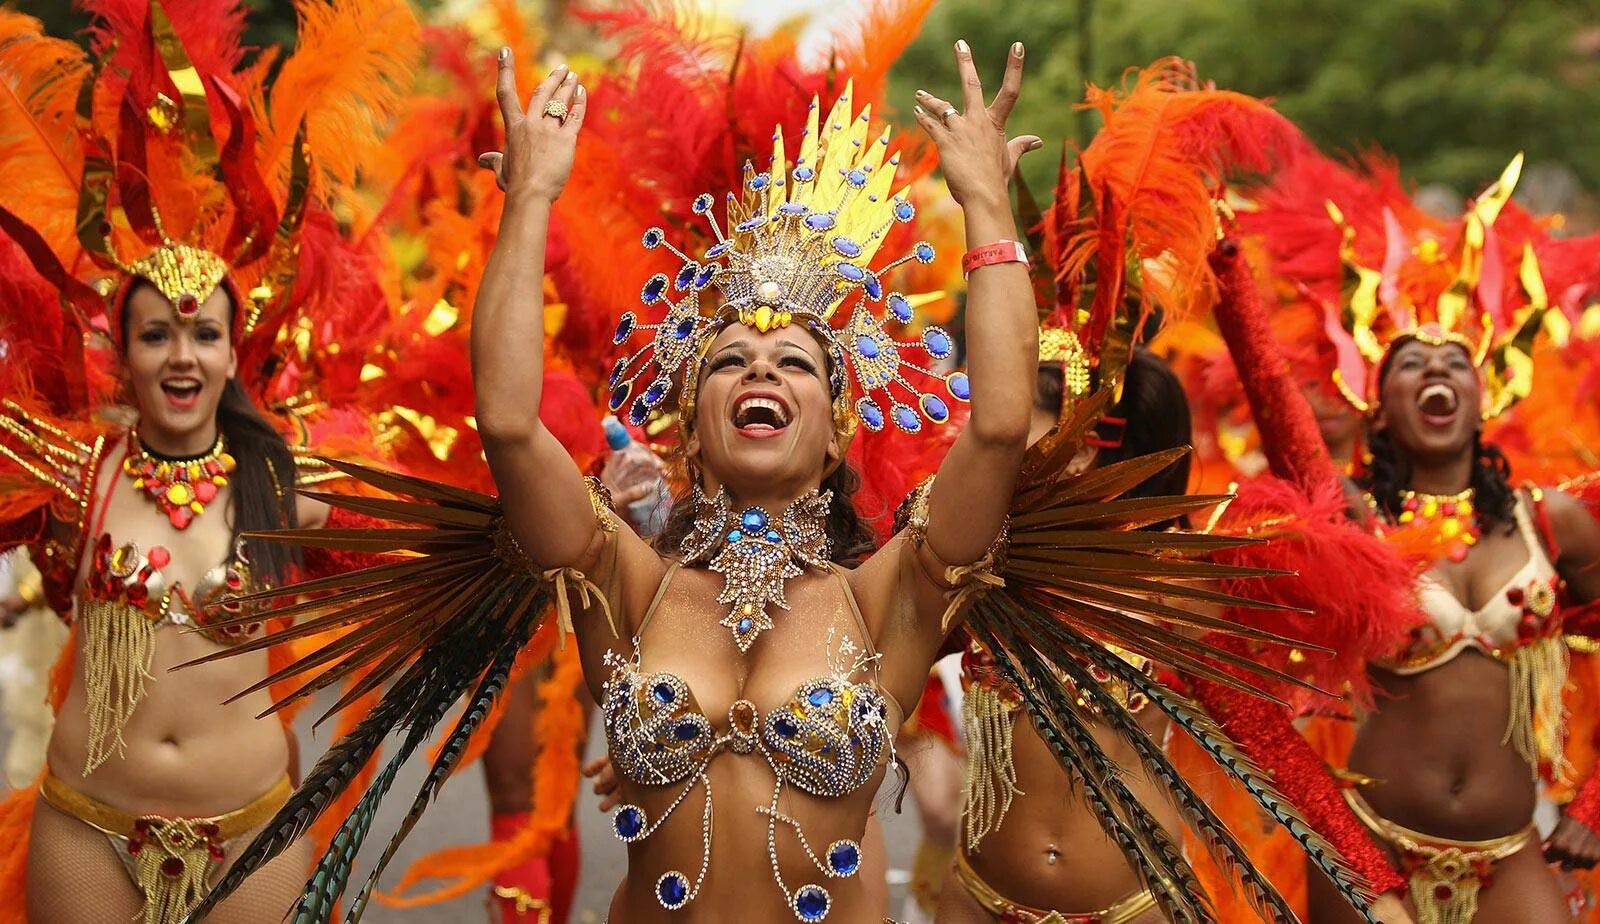 Карнавал в Рио-де-Жанейро Бразилия. Андреа Мартинс Бразилия карнавал. Бразильский фестиваль в Рио де Жанейро. Бразильский карнавал Бразилия.